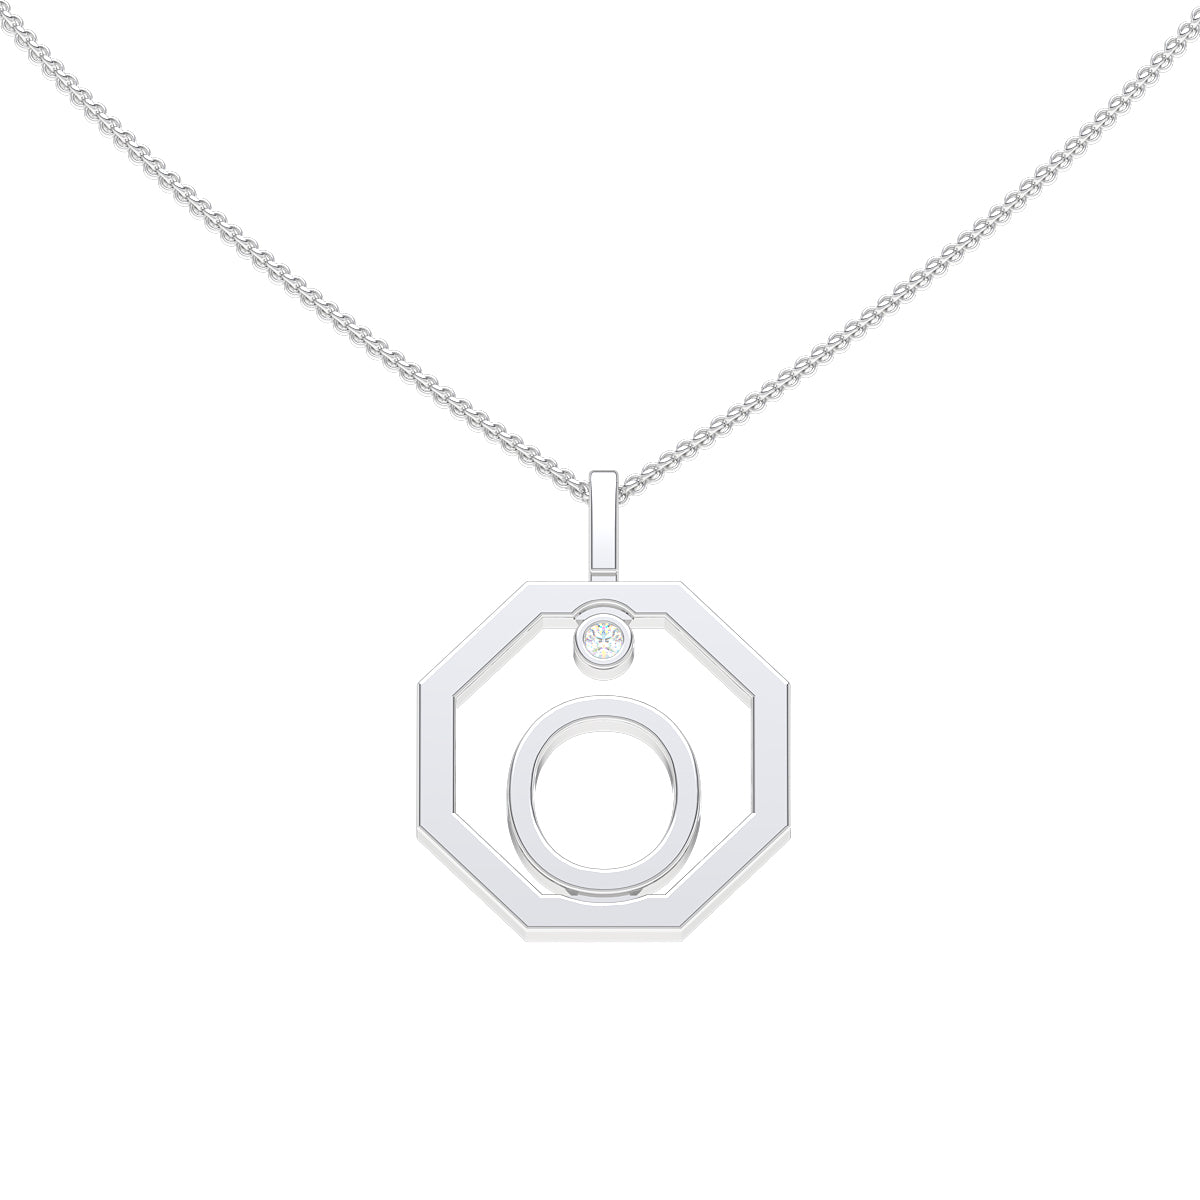 Personalised-Initial-O-diamond-white-gold-pendant-by-Sydney-jewellers-Lizunova